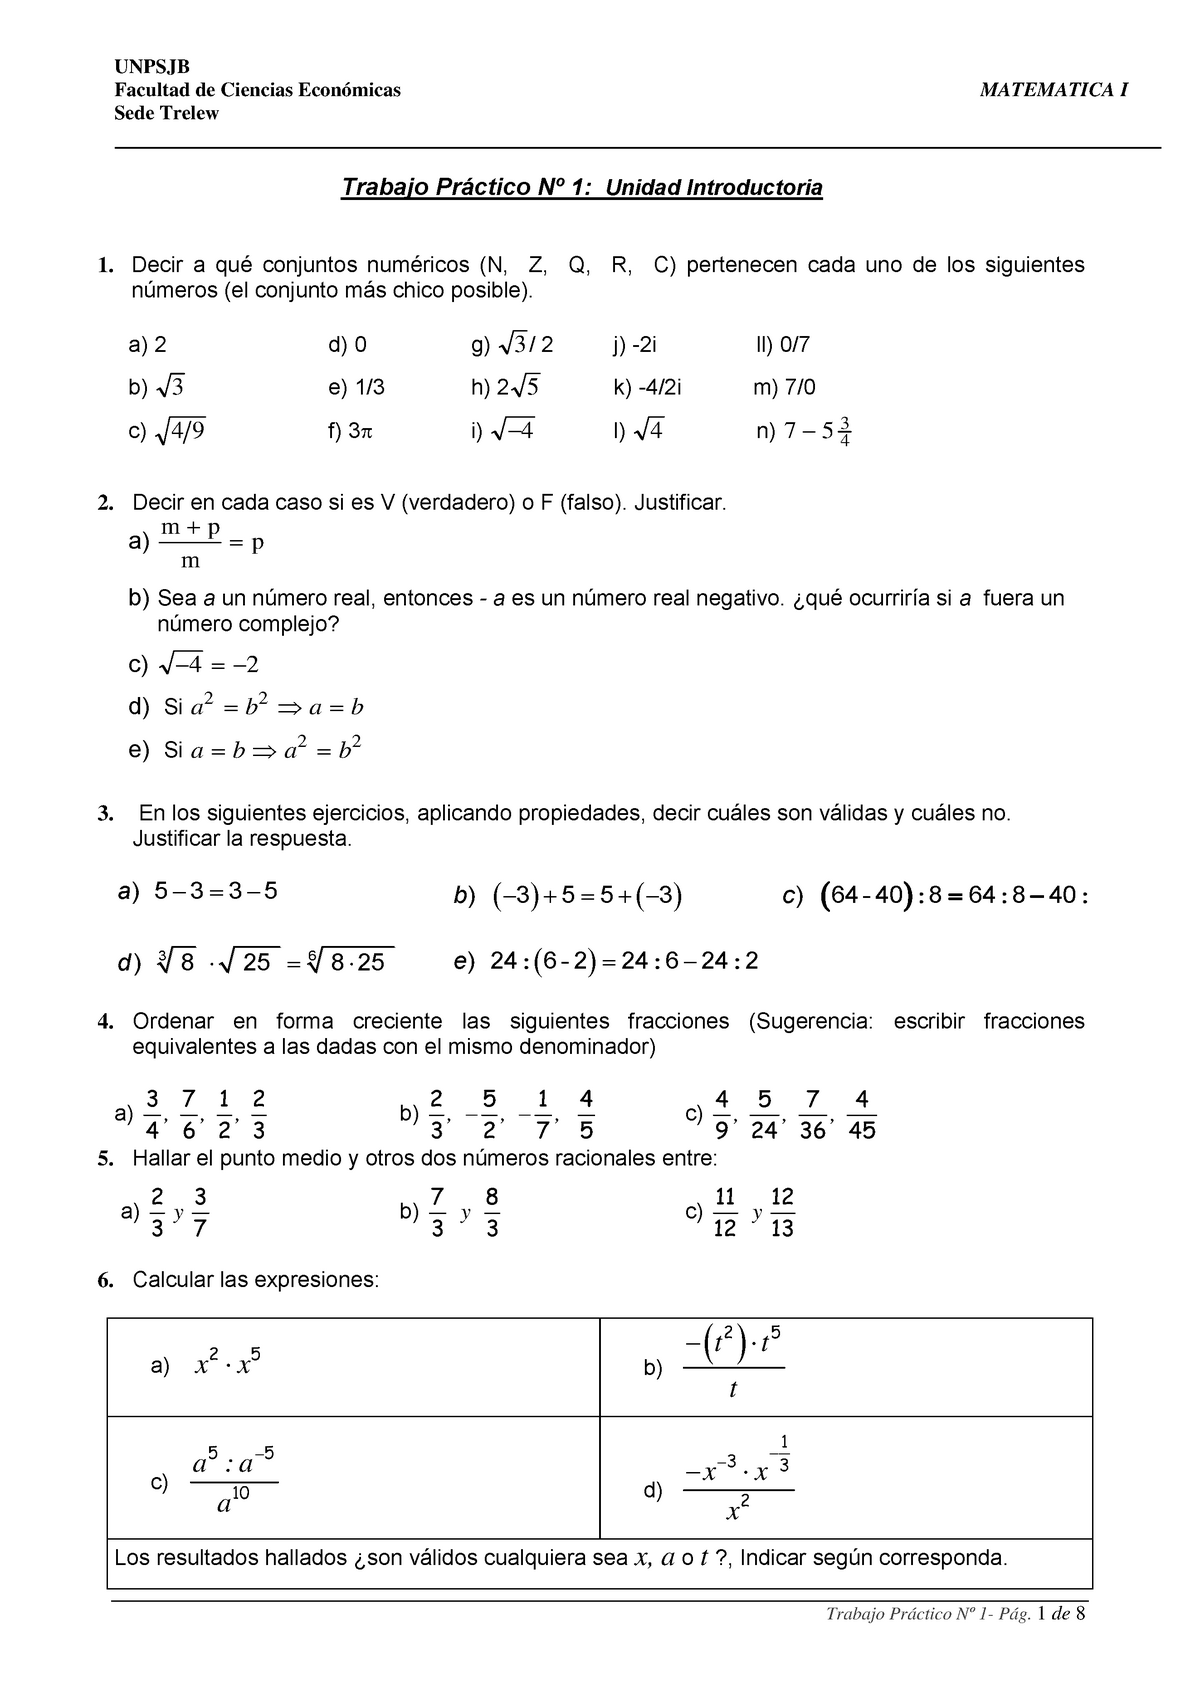 Trabajo Practico No 1 2014 Matematica I 111 Unpsjb Studocu